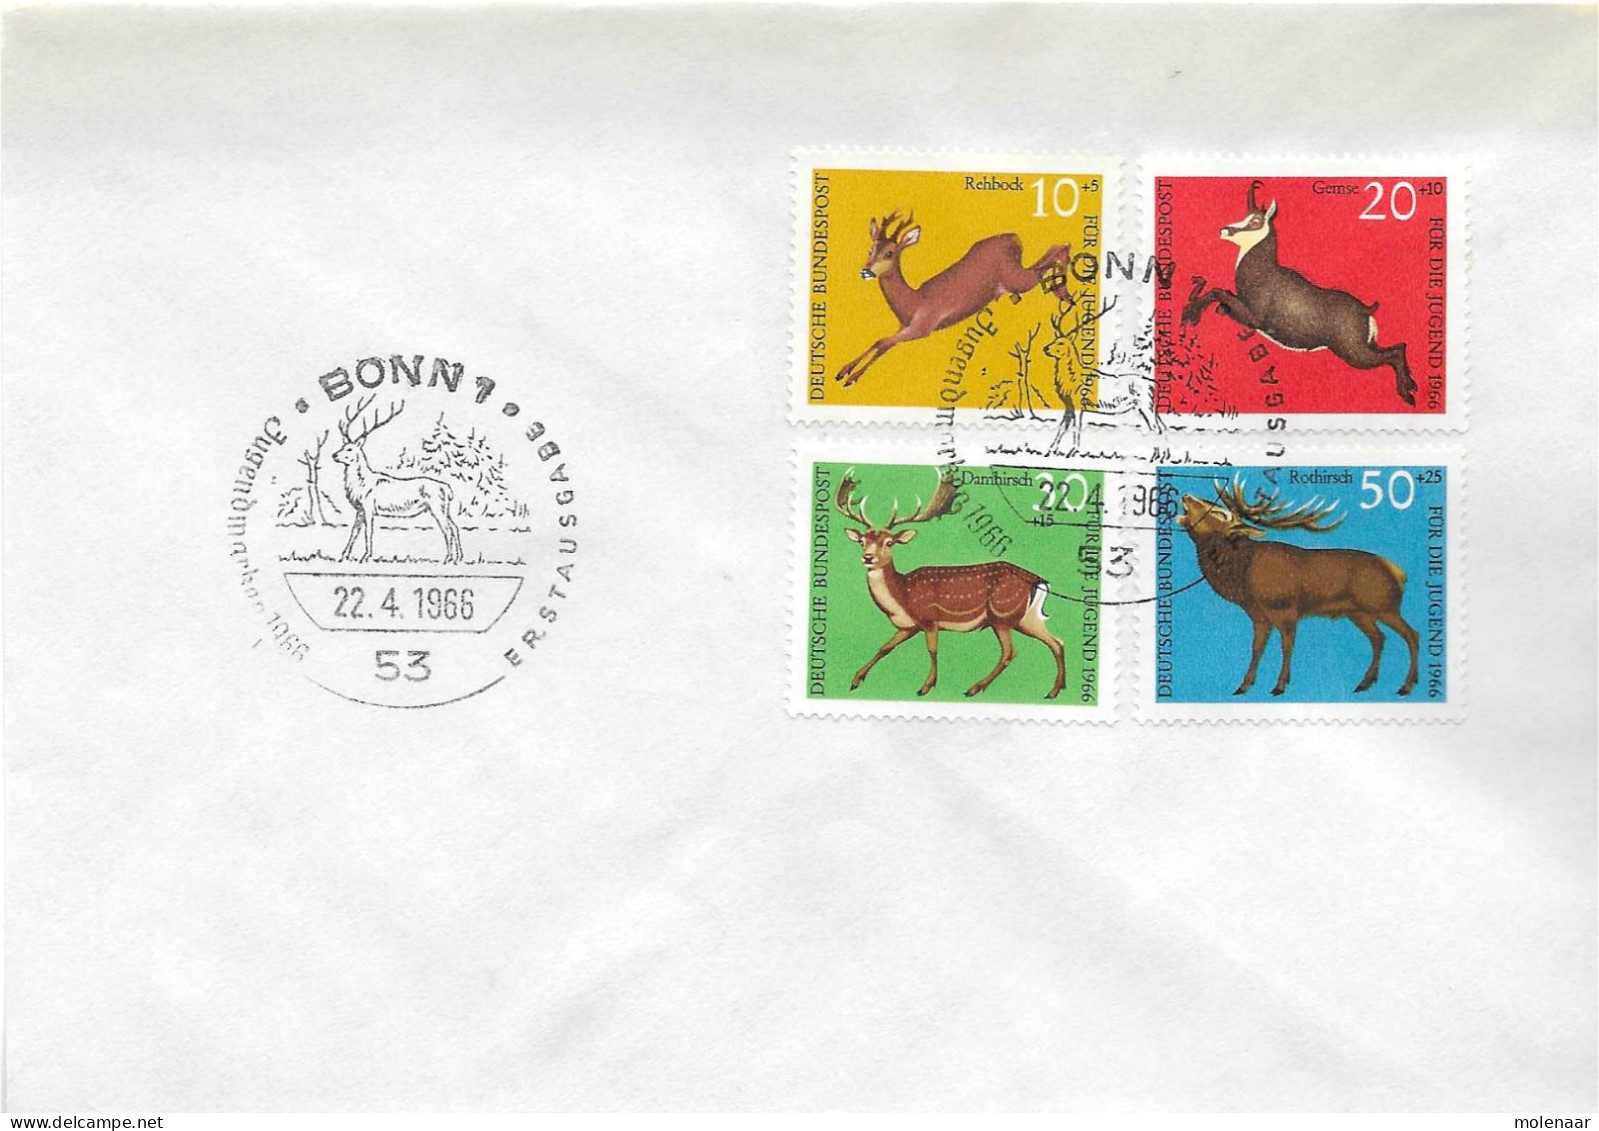 Postzegels > Europa > Duitsland > West-Duitsland > 1960-1969 > Brief Met No. 511-514 (17380) - Covers & Documents